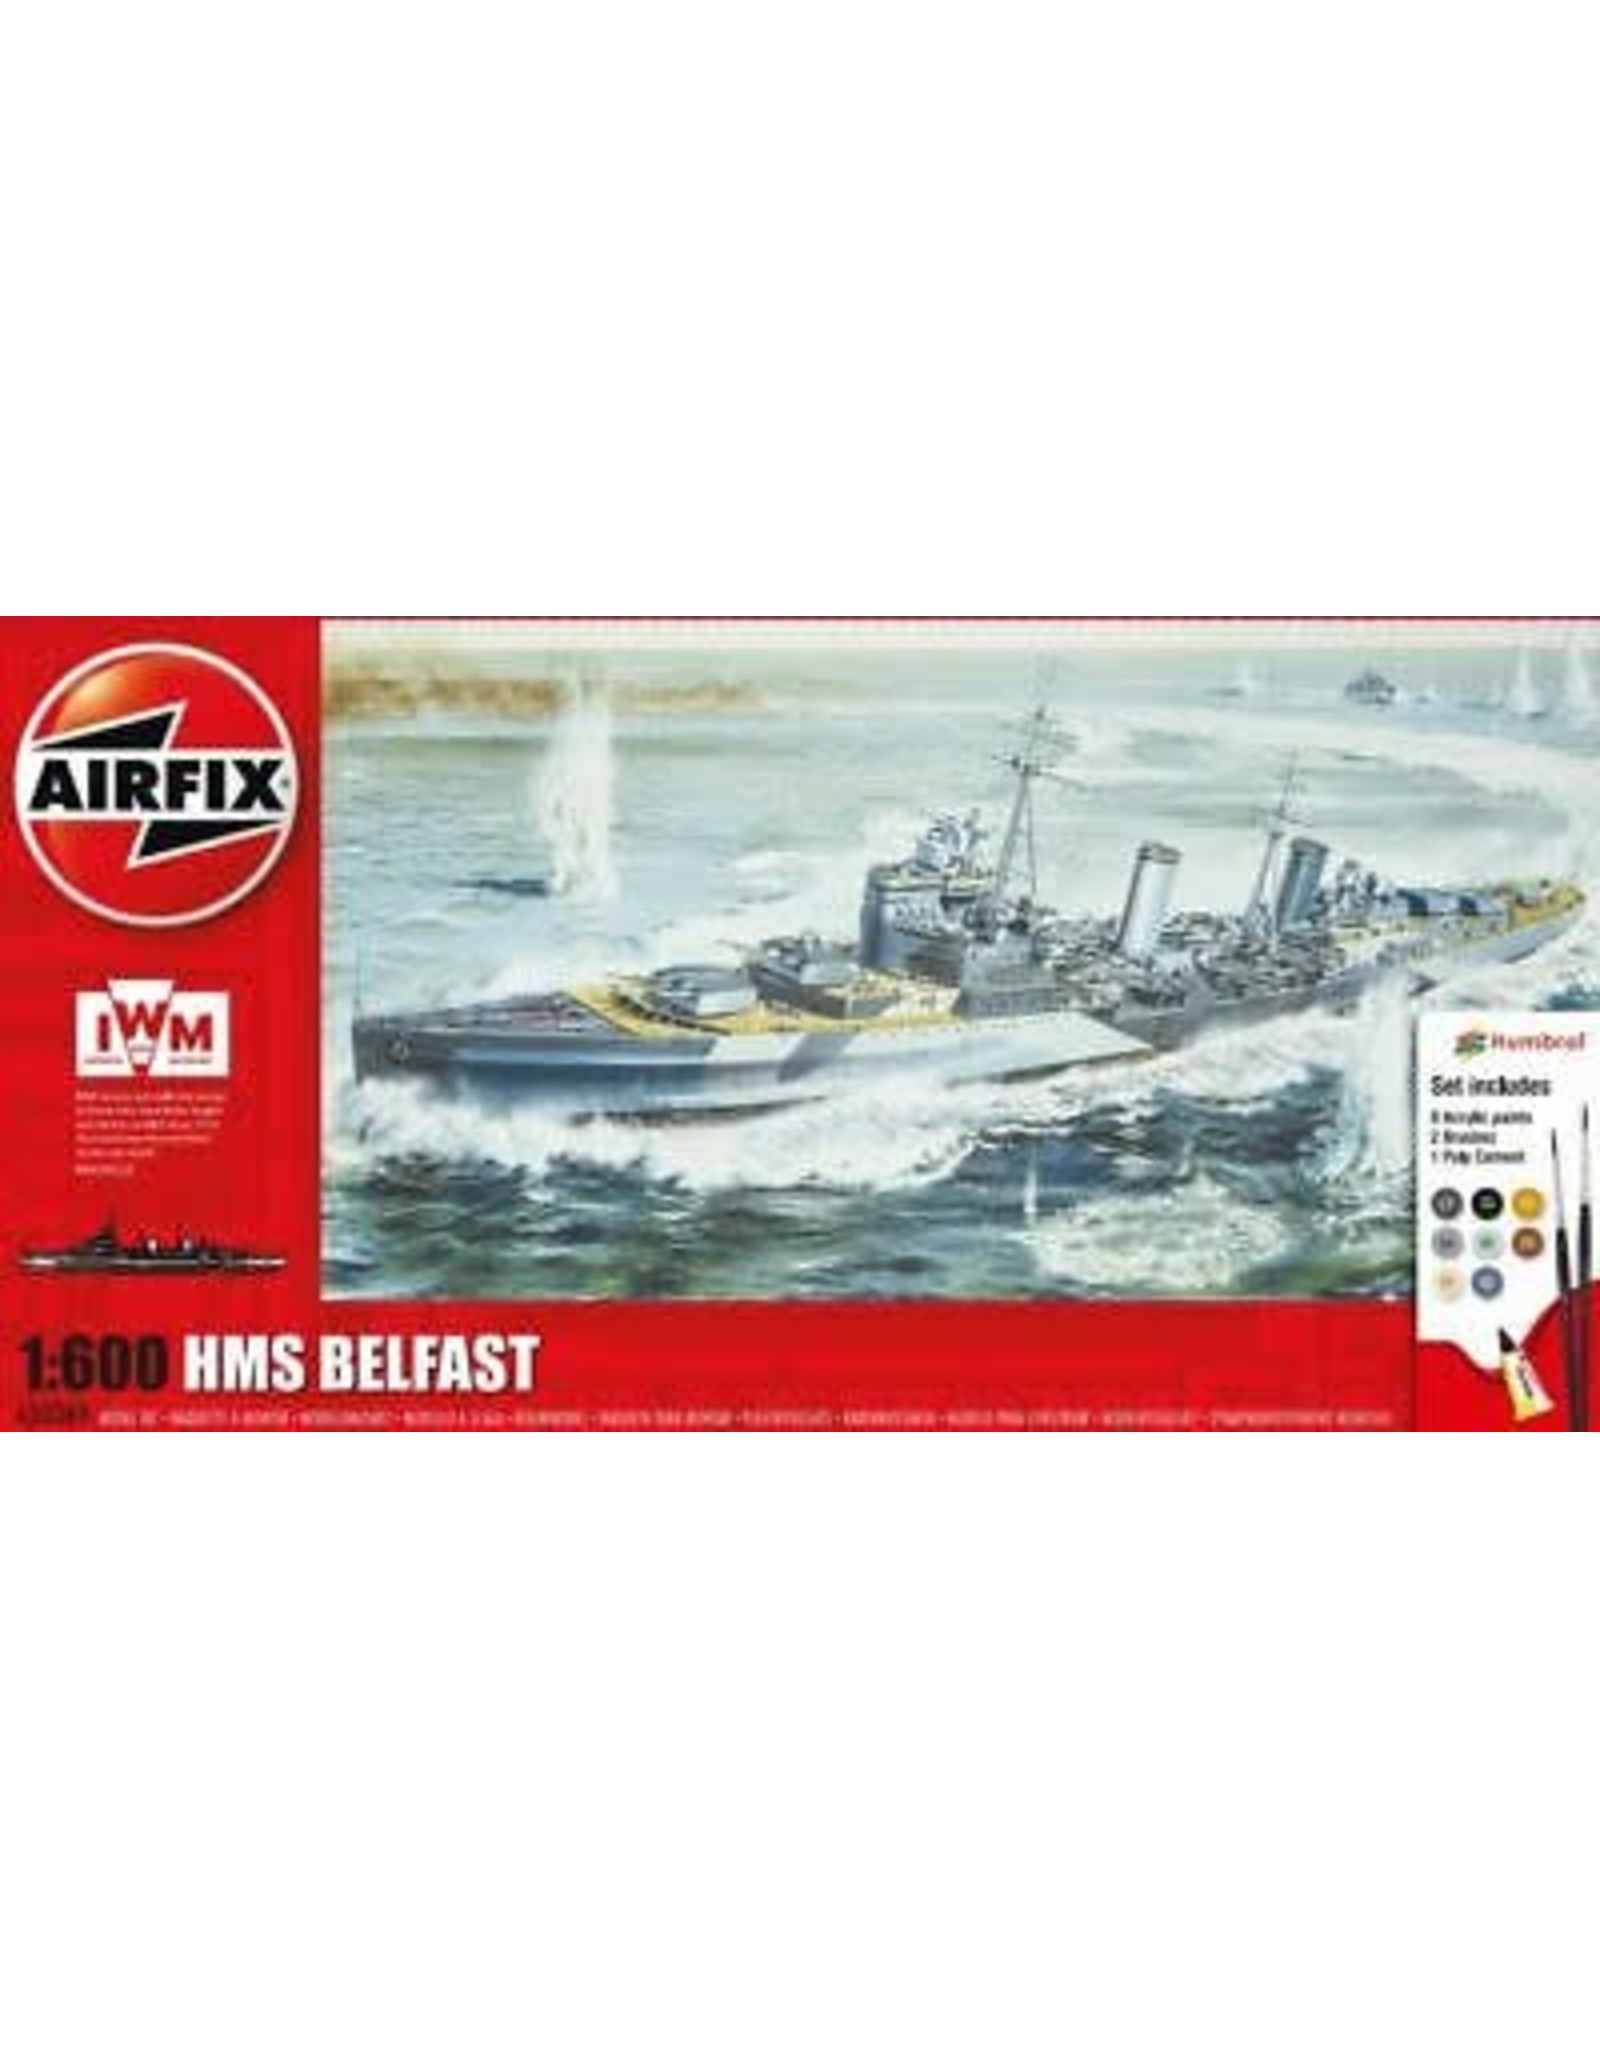 Airfix HMS Belfast 1:600